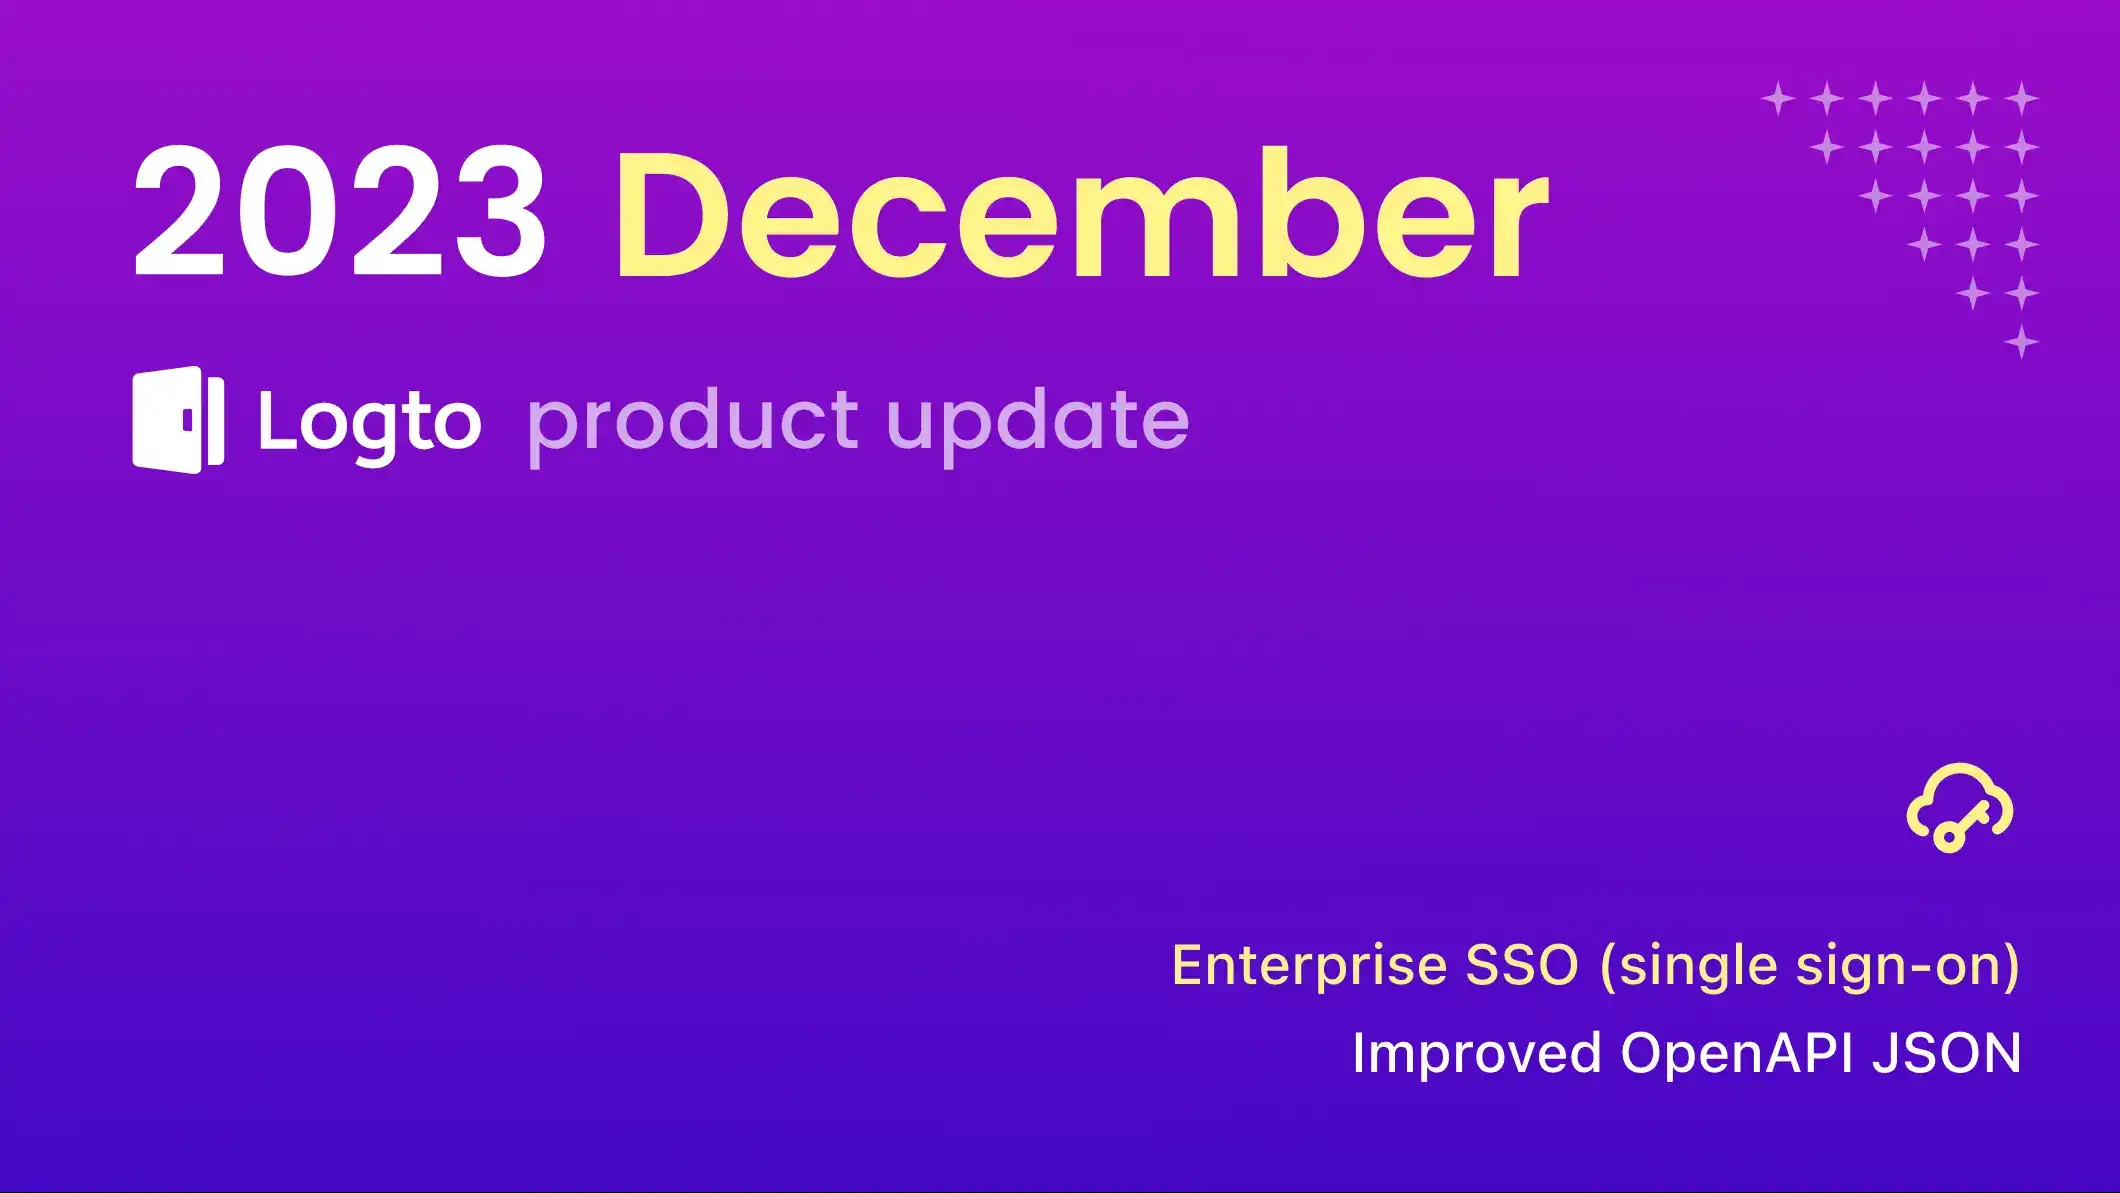 Logto product update: Enterprise SSO (single sign-on)